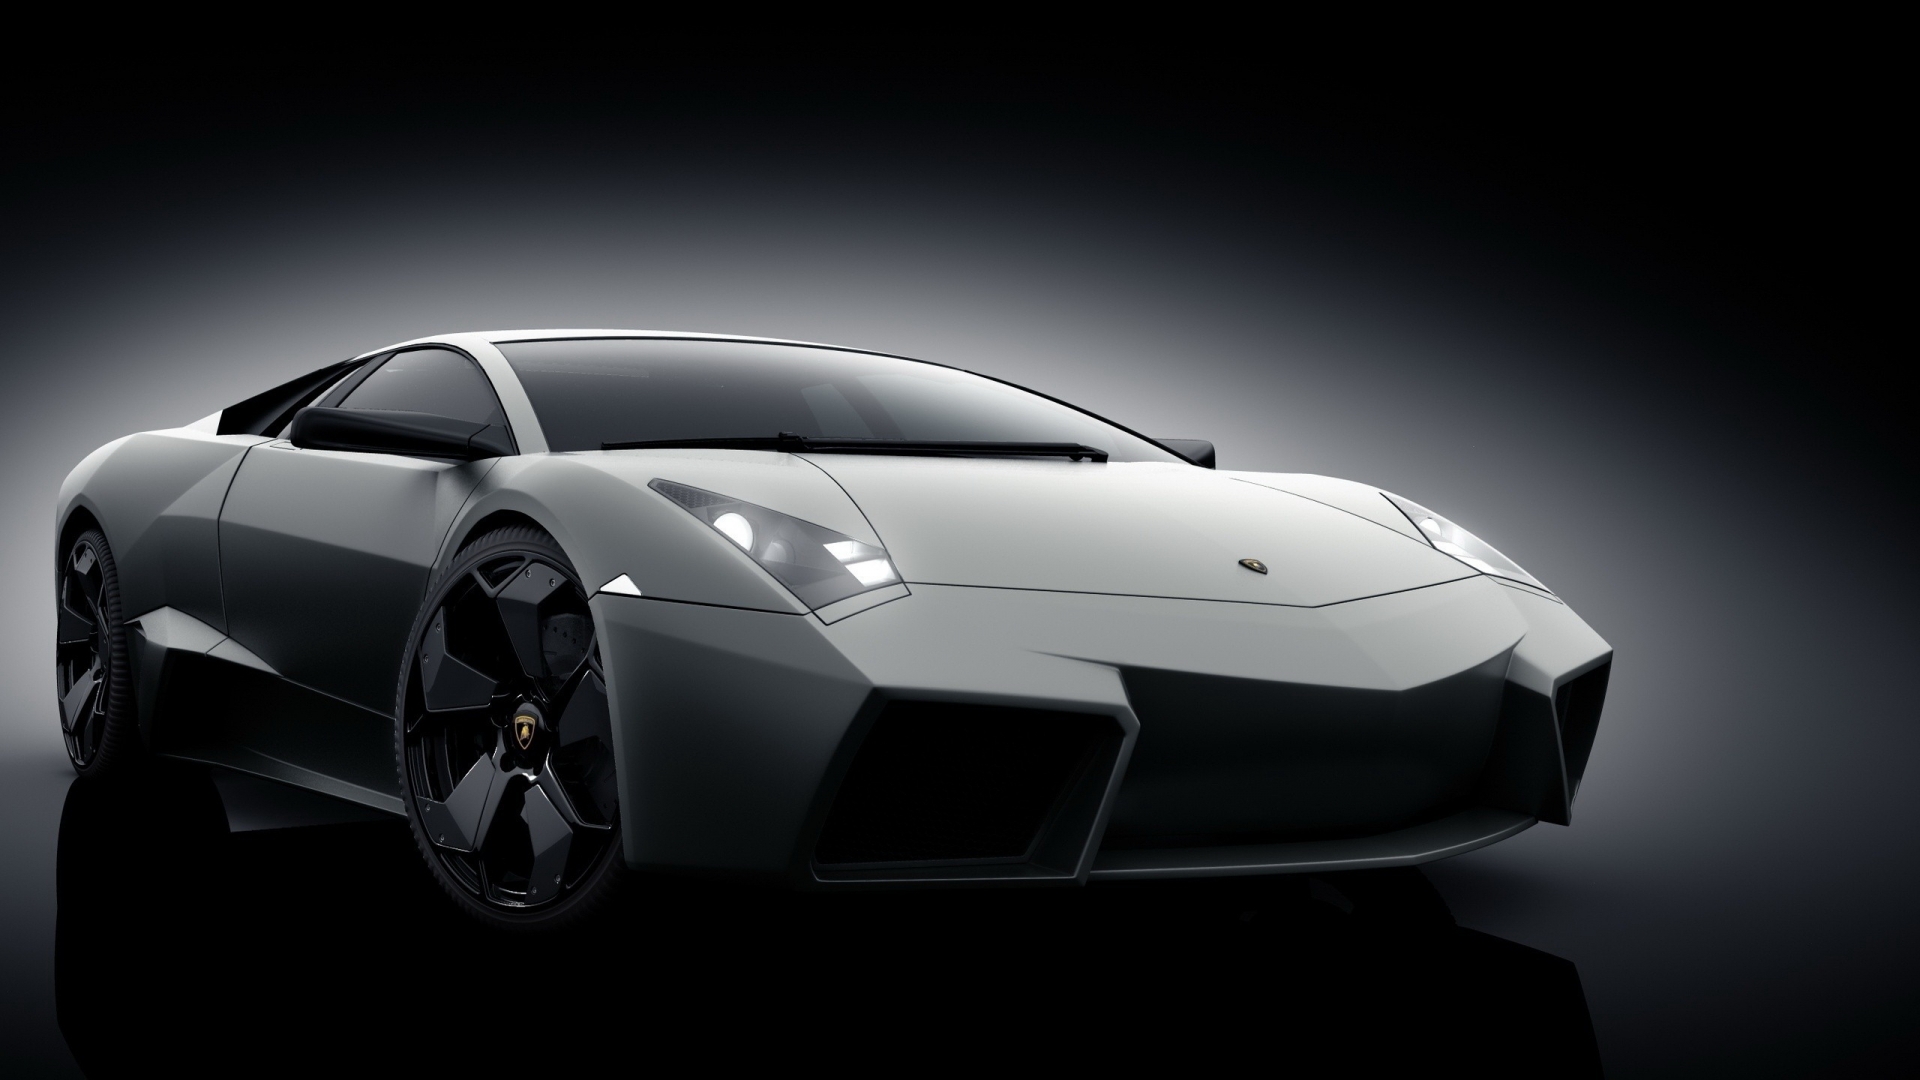 Grey Lamborghini Reventon for 1920 x 1080 HDTV 1080p resolution